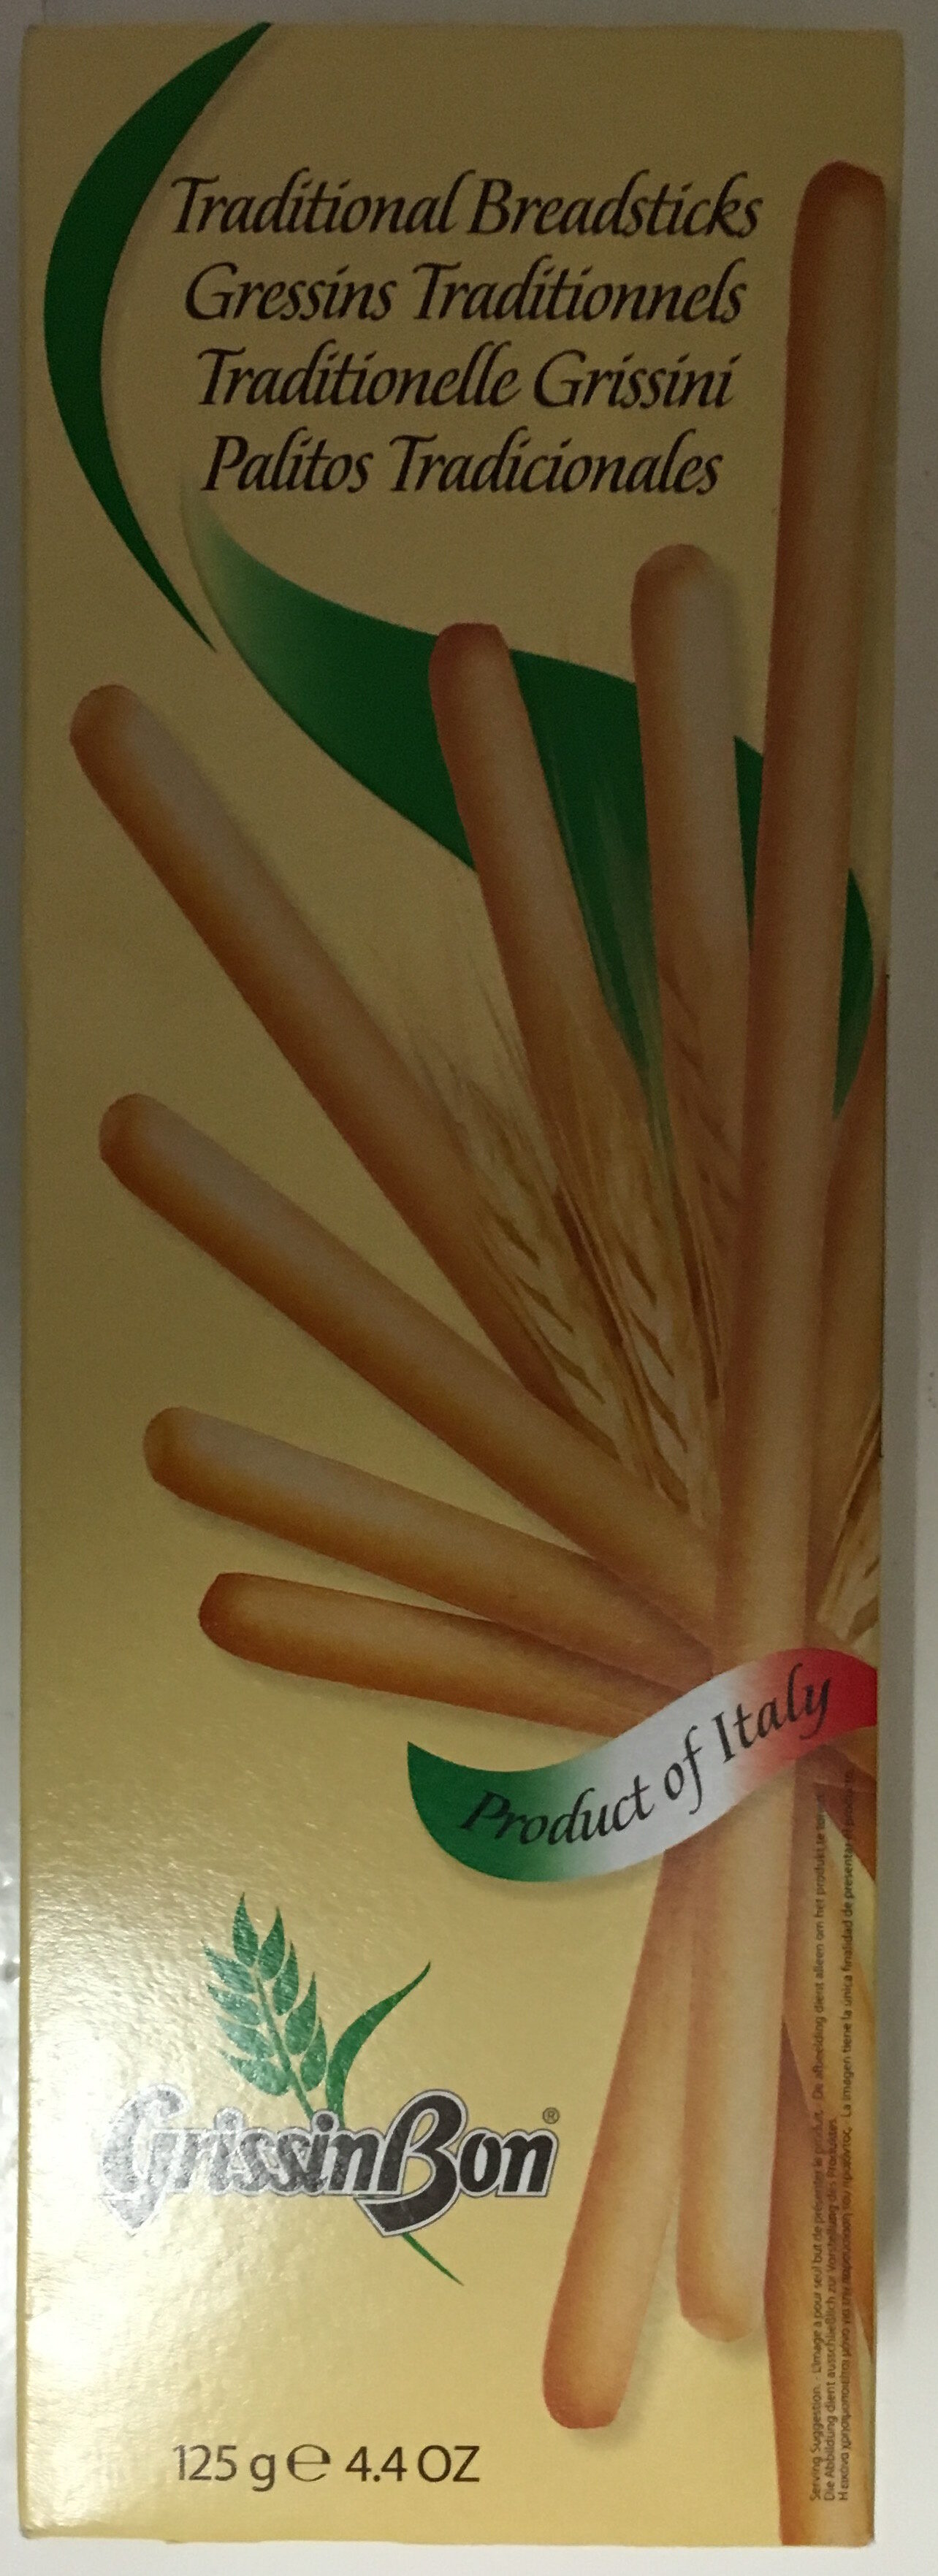 Traditional breadsticks - Prodotto - en